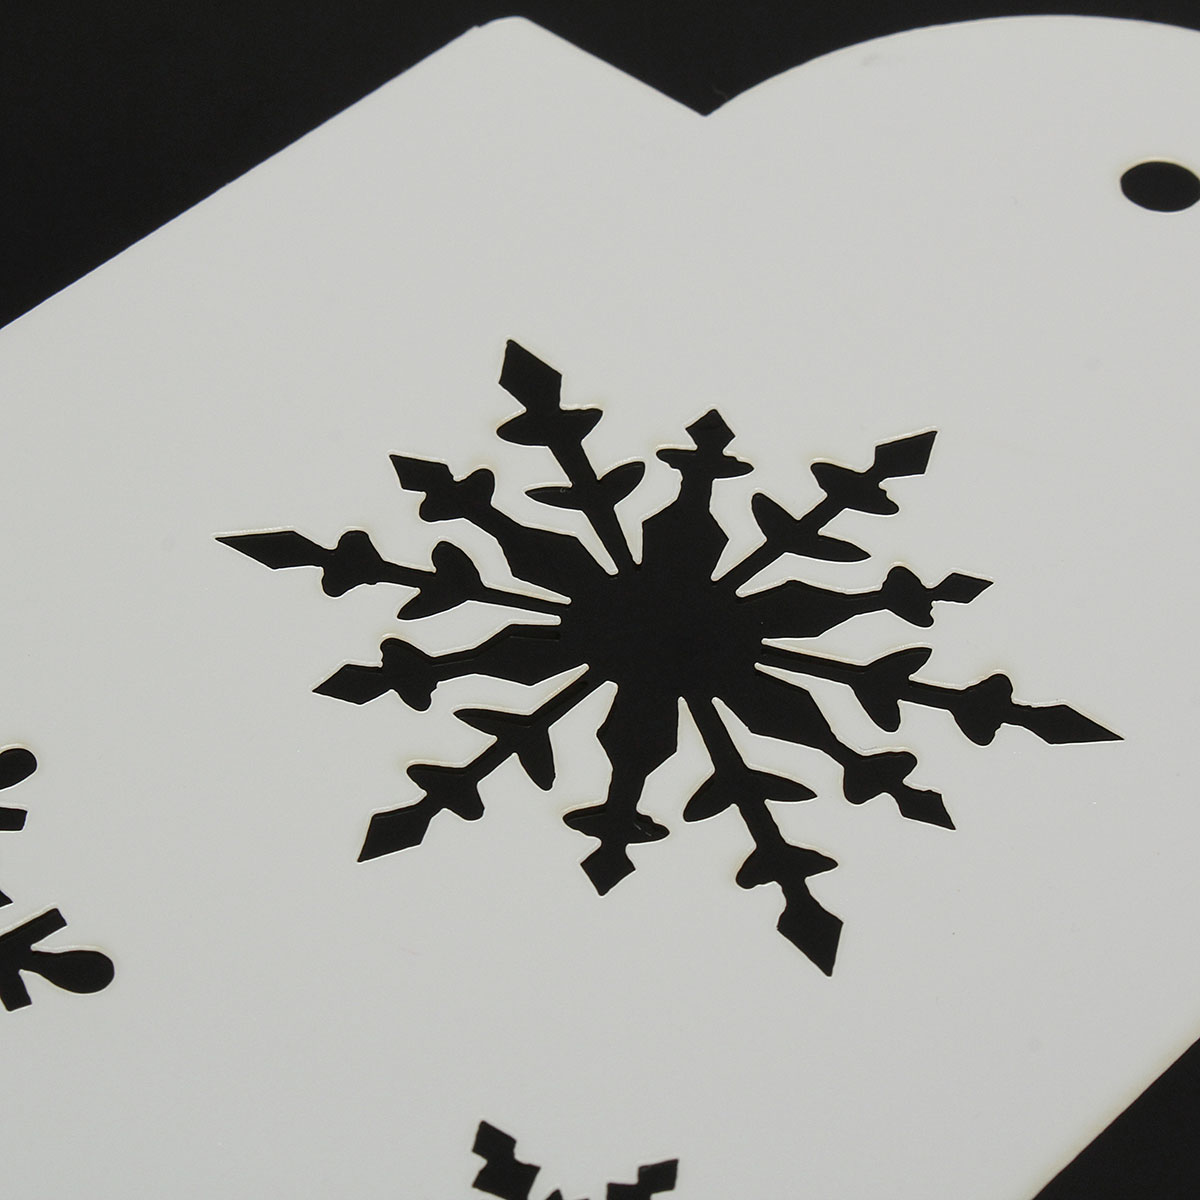 Snowflake-Side-Cake-Stencil-Border-Designer-Decorating-Craft-Cookie-Baking-Tool-1089825